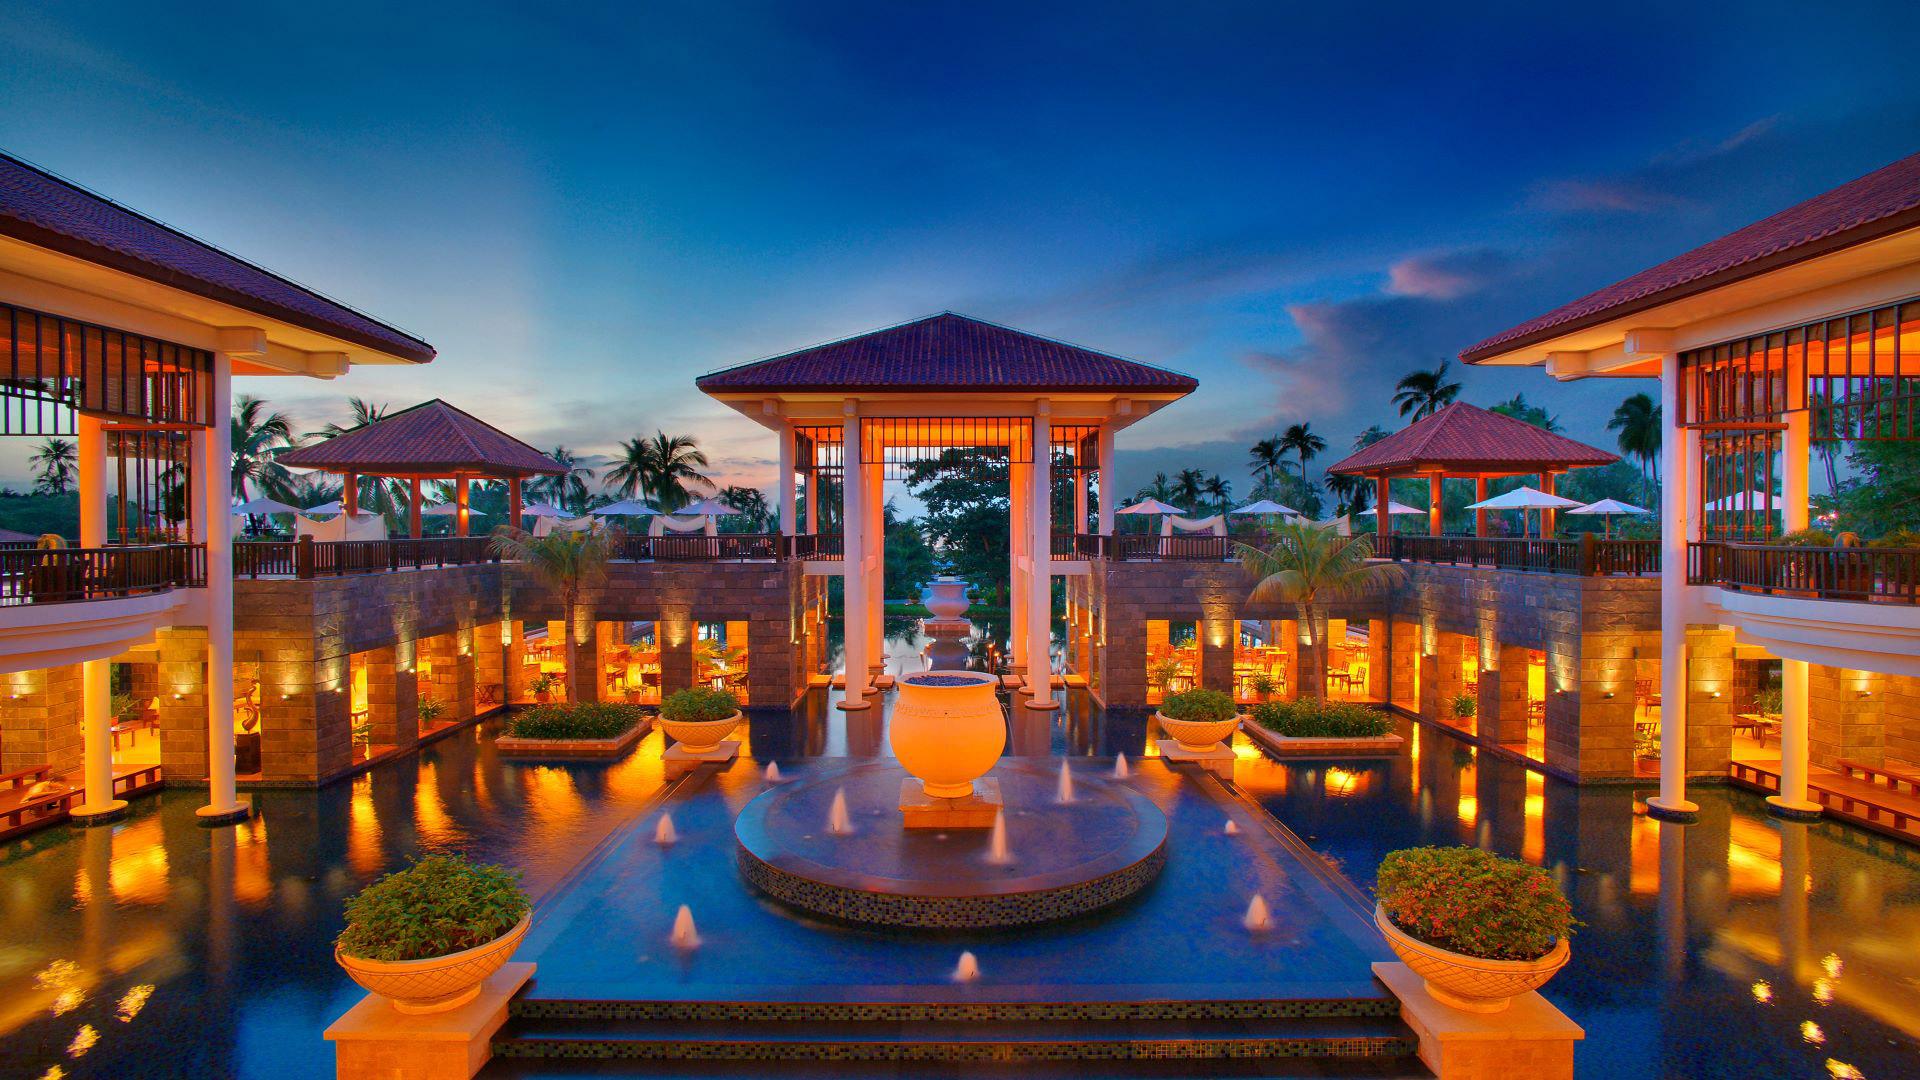 Luxury Pool Villa Resort in Banyan Tree Sanya China